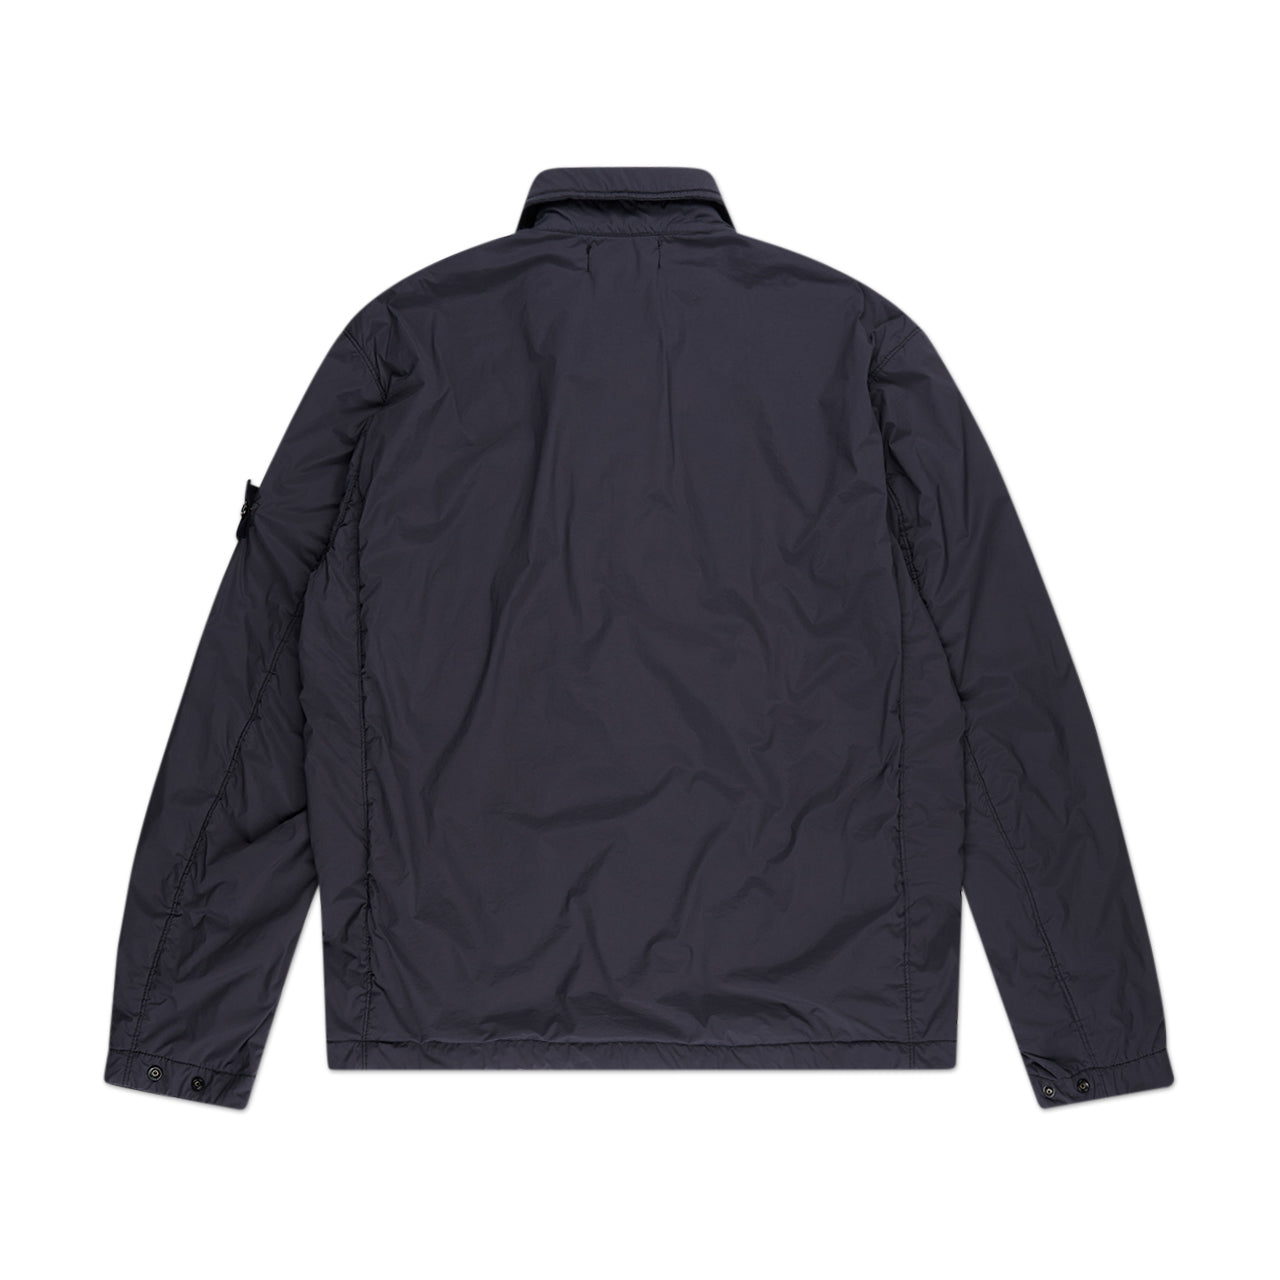 stone island stone island skin touch nylon-tc jacket (black)